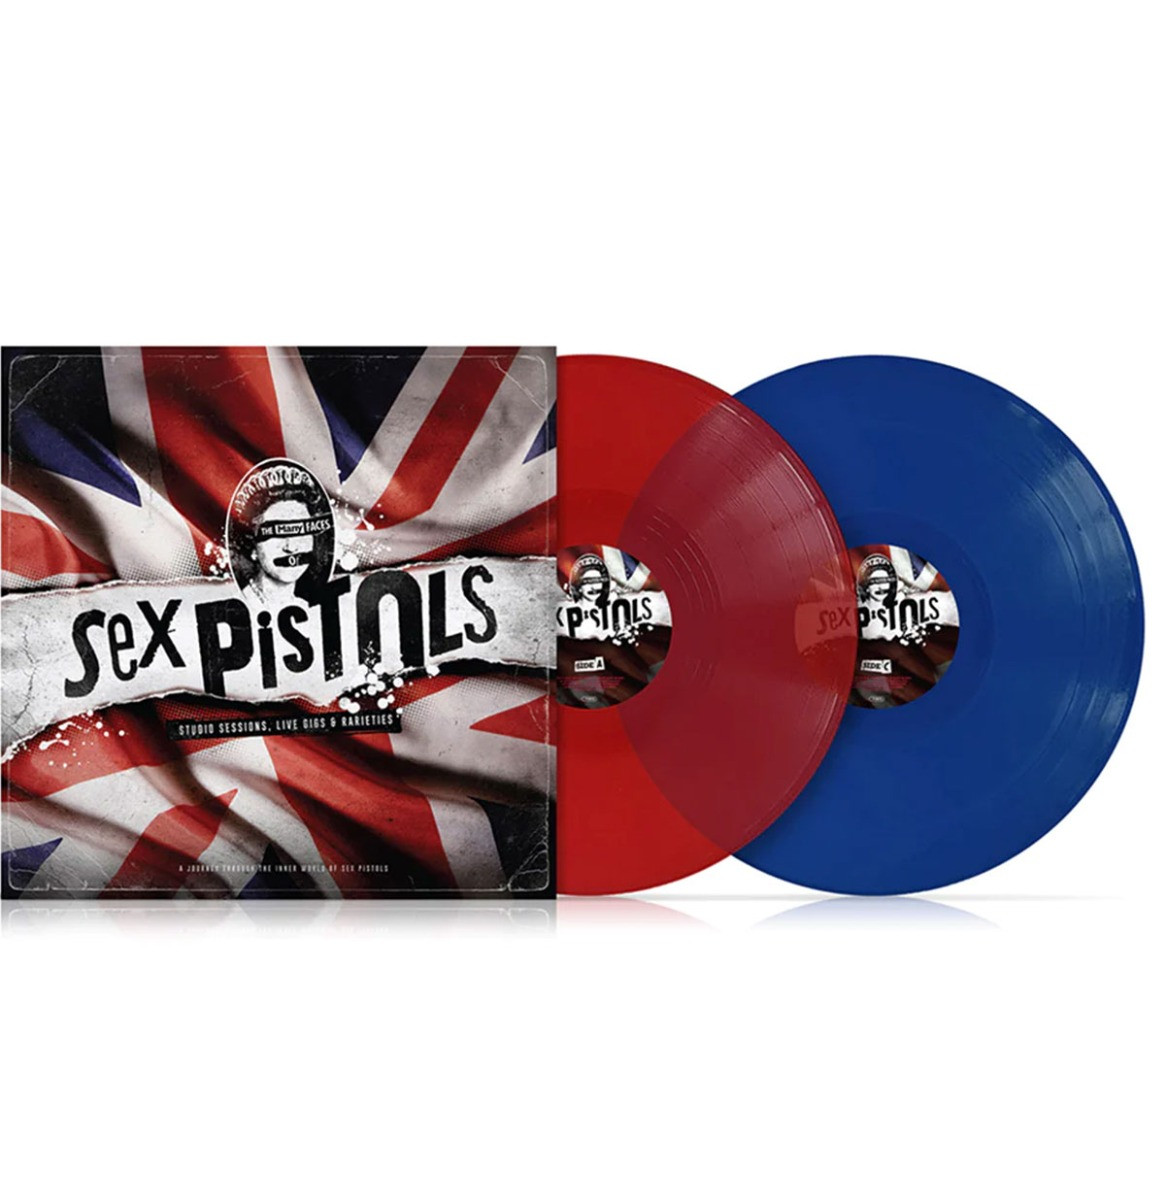 Sex Pistols - The Many Faces Of (Studio Sessions, Live Gigs & Rarities) (Gekleurd Vinyl) 2LP